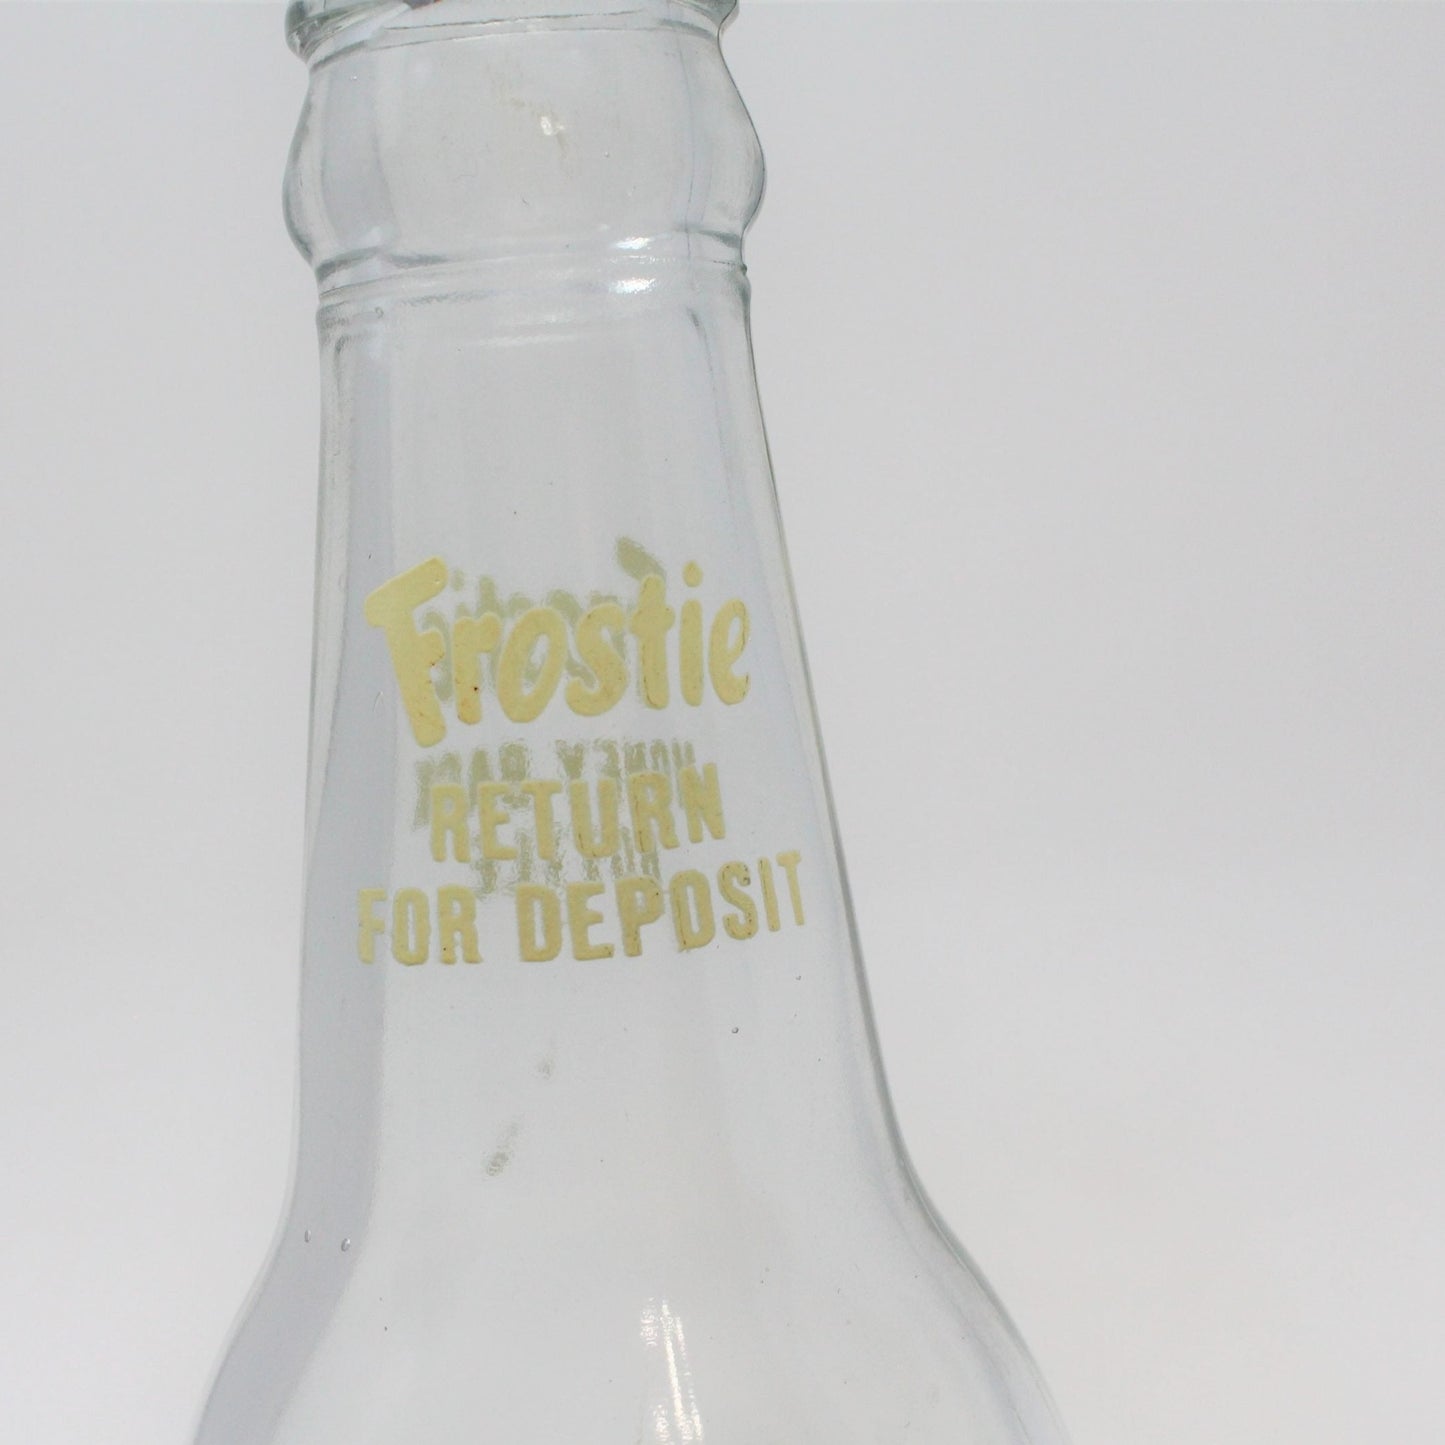 Soda Bottle, Frostie Root Beer, ACL 10oz, Camden, N.J., Vintage 1973